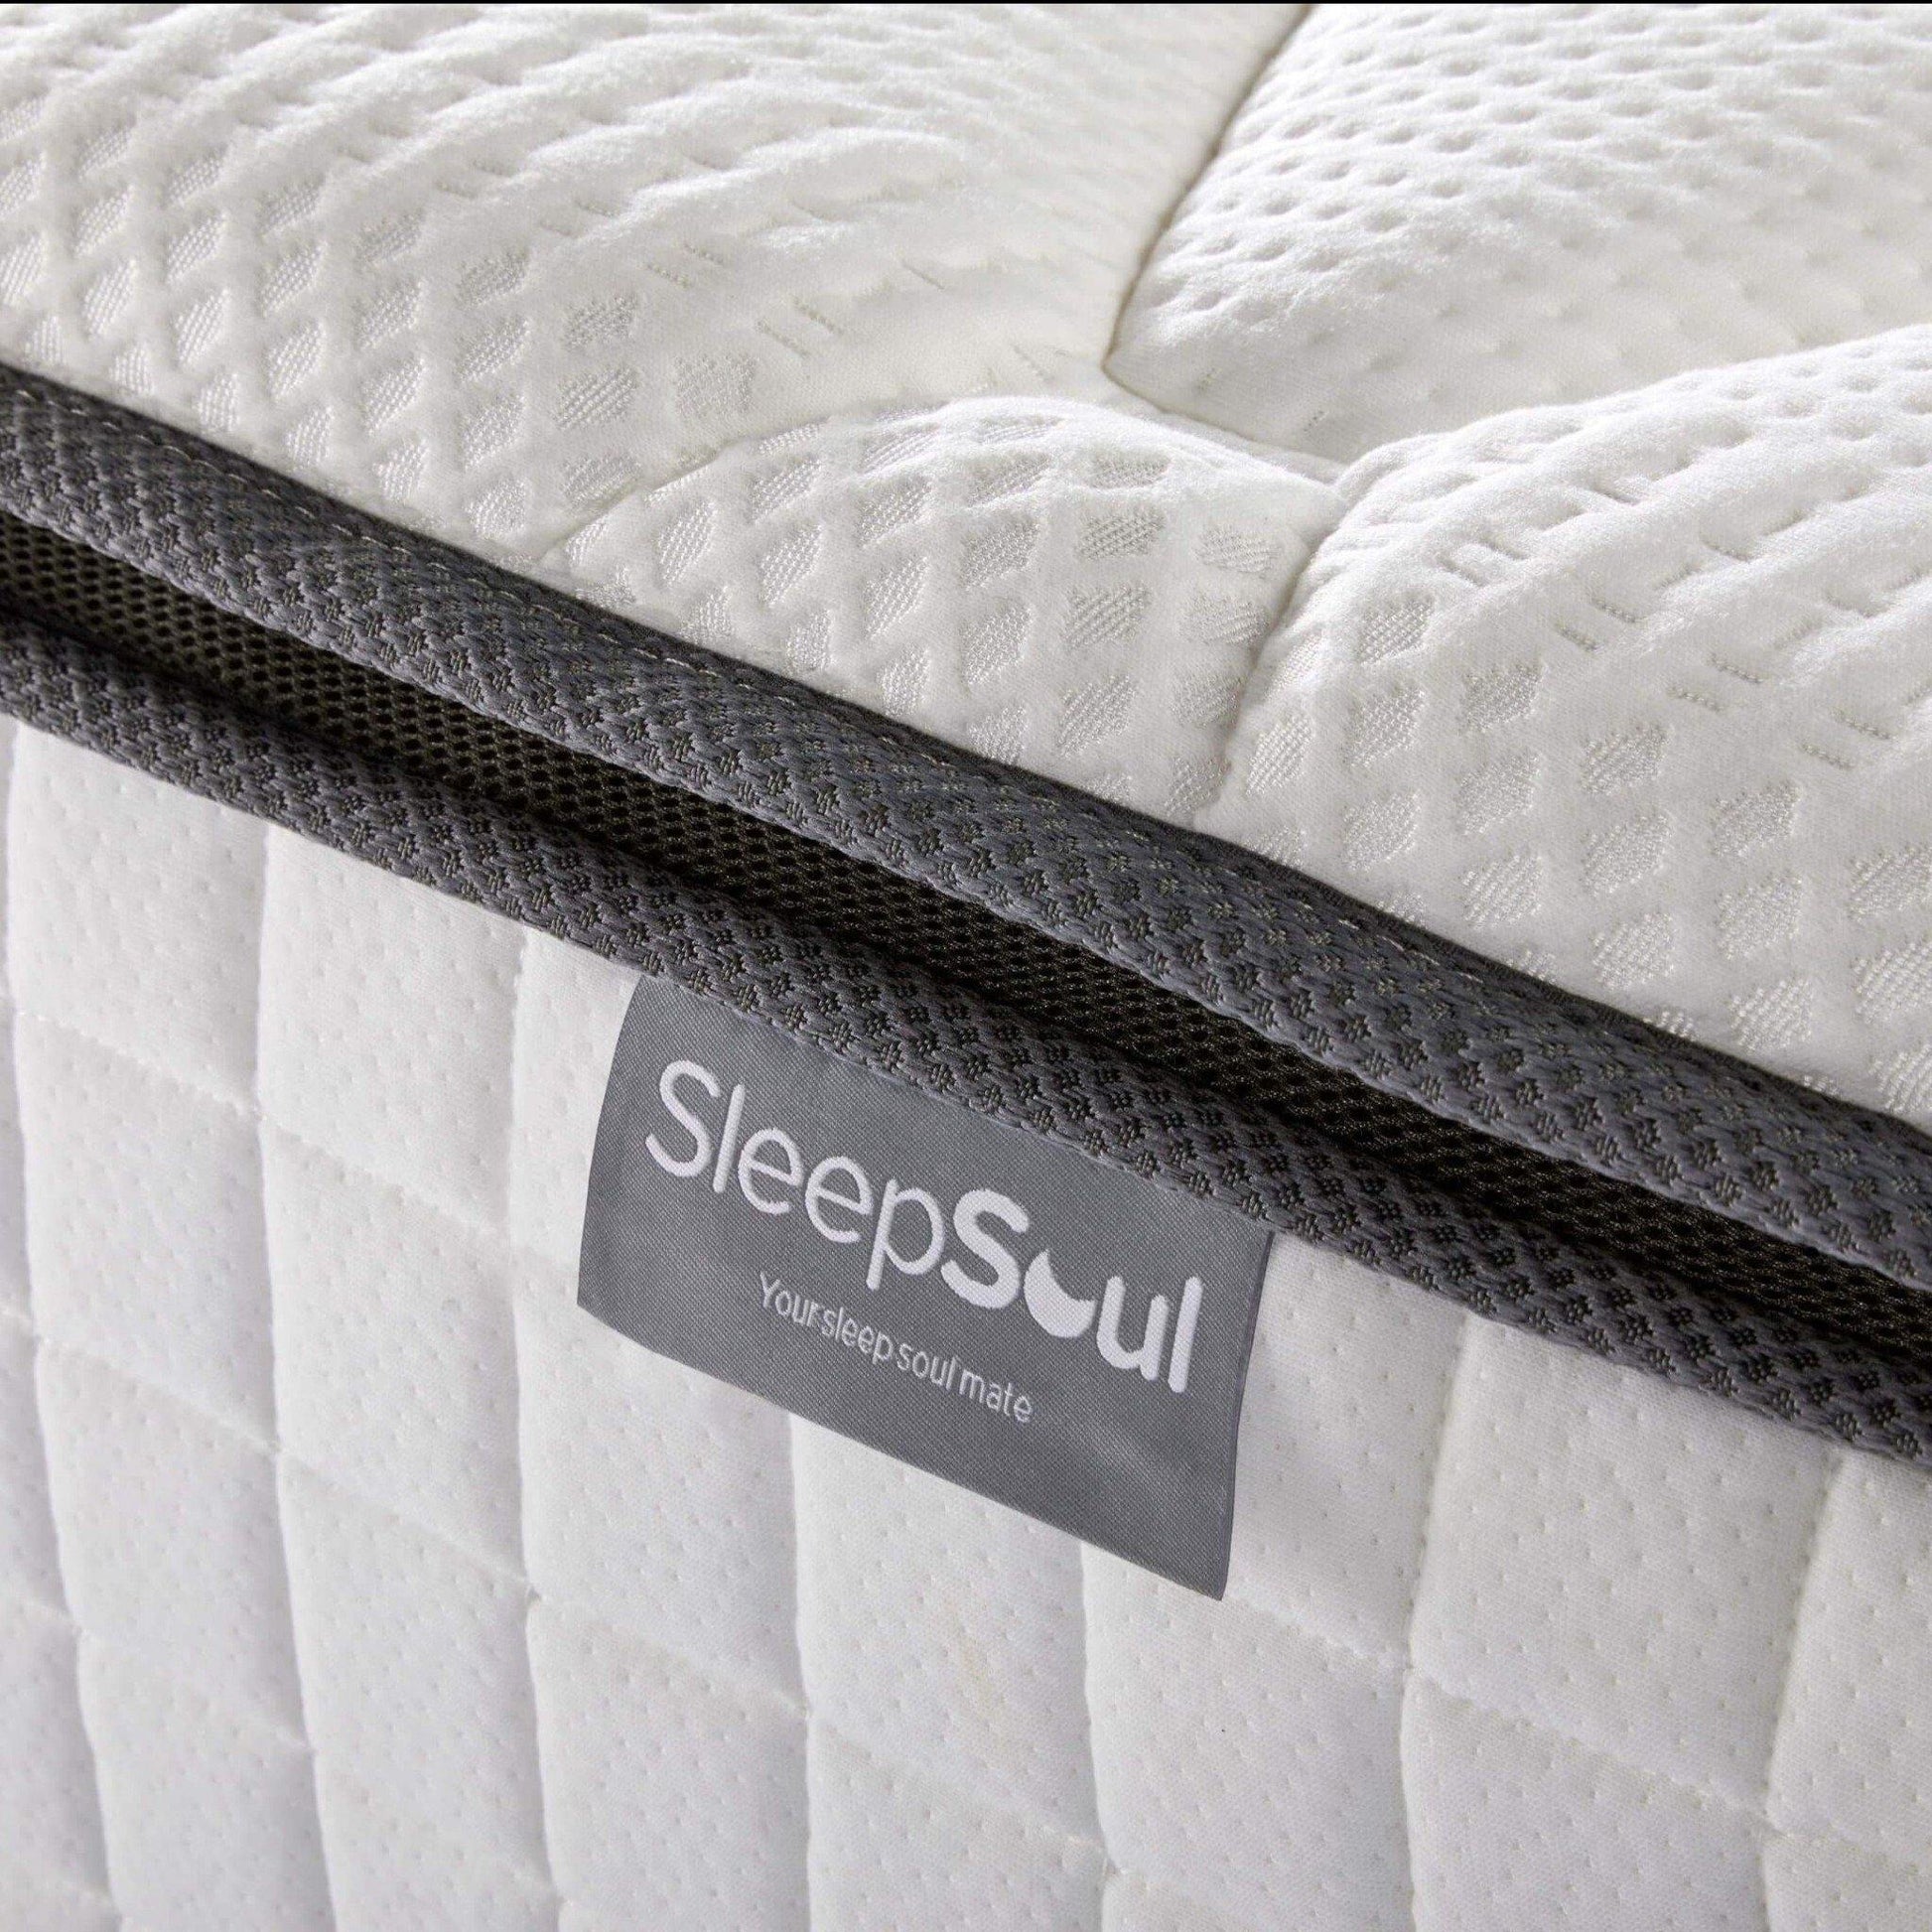 SleepSoul bliss 800 pocket spring and memory foam pillow top standard single mattress